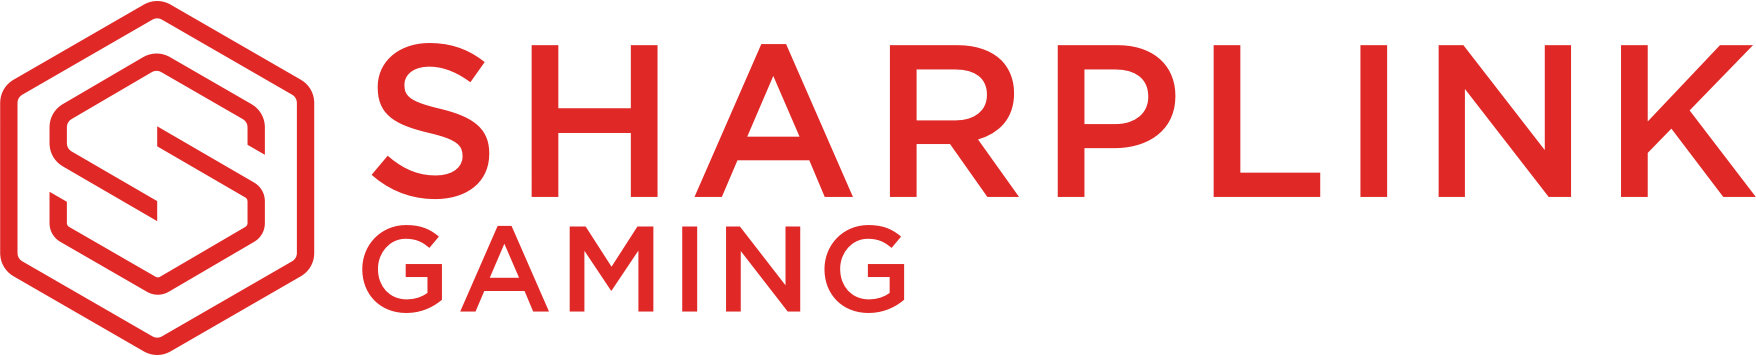 SharpLink Gaming Ltd., Wednesday, December 28, 2022, Press release picture